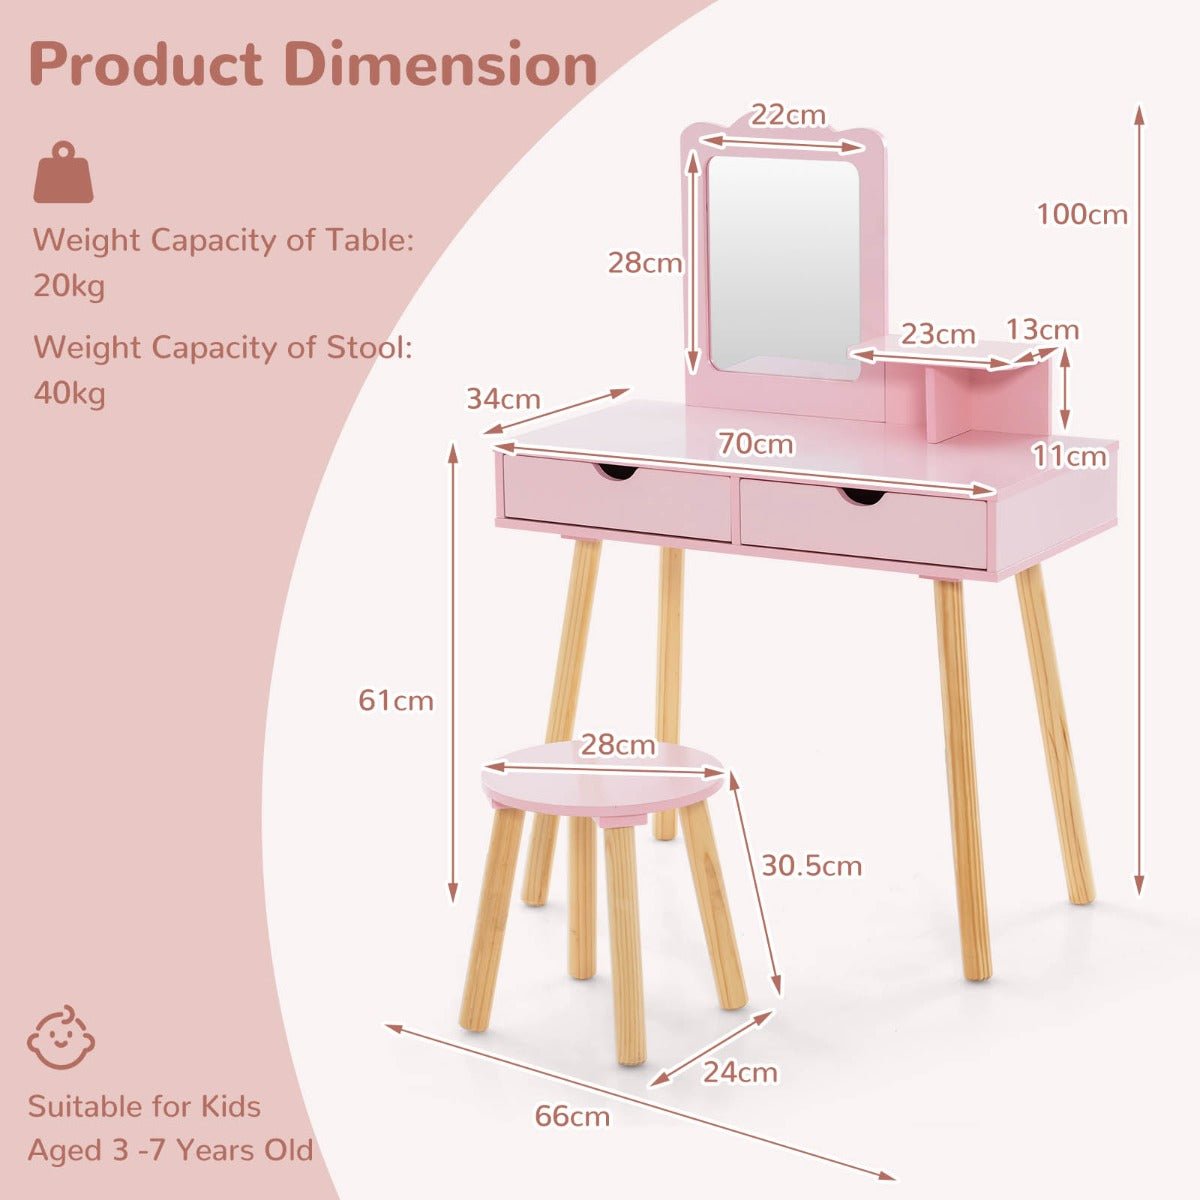 Kids Wood Vanity Table & Stool with 1 Rectangular Mirror and 2 Large Drawers-Pink - Kids Mega Mart